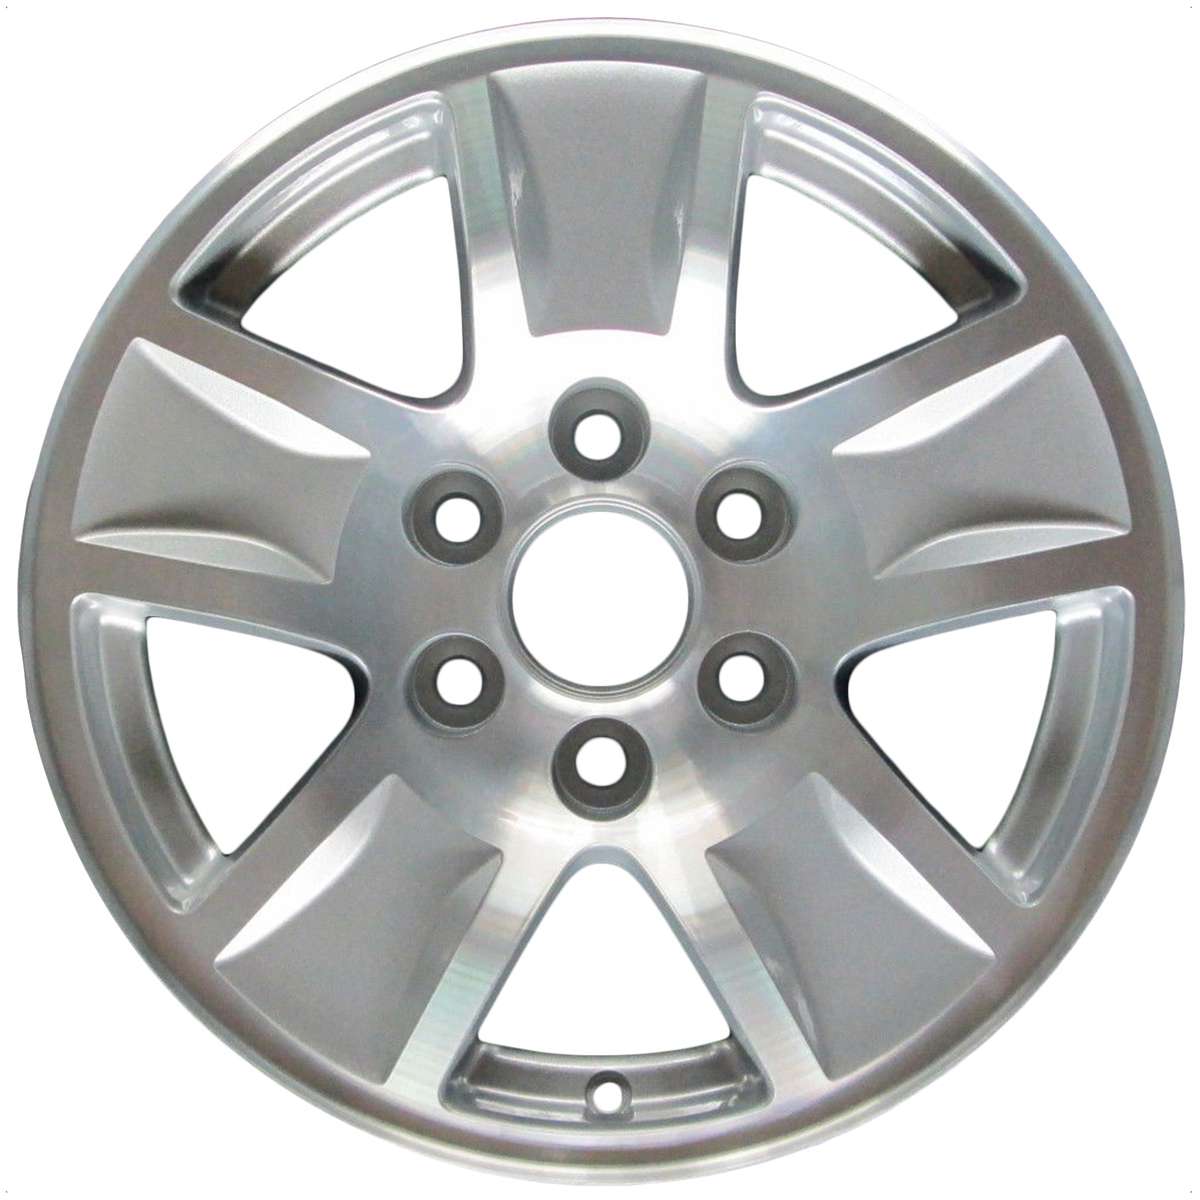 2014 Chevrolet Silverado 1500 17" OEM Wheel Rim W5657MS